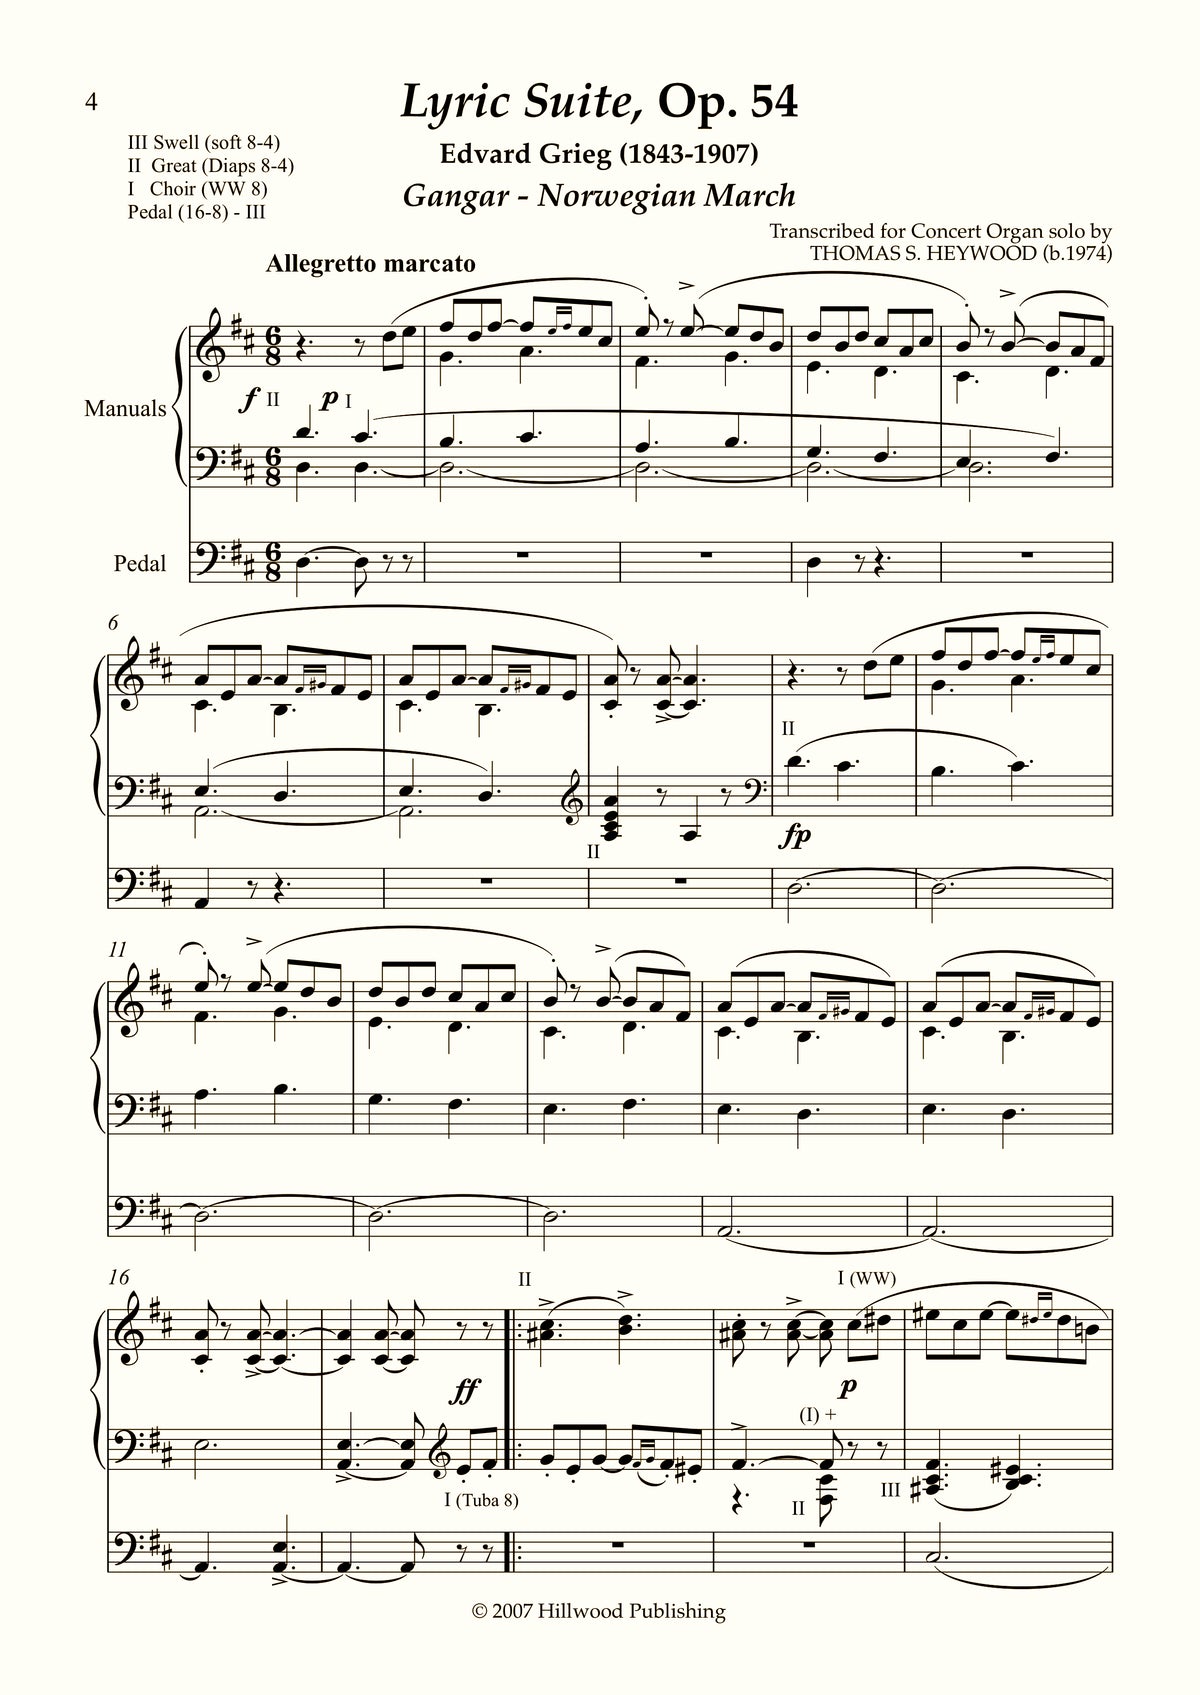 Grieg/Heywood - Norwegian March from the Lyric Suite, Op. 54 (Score)